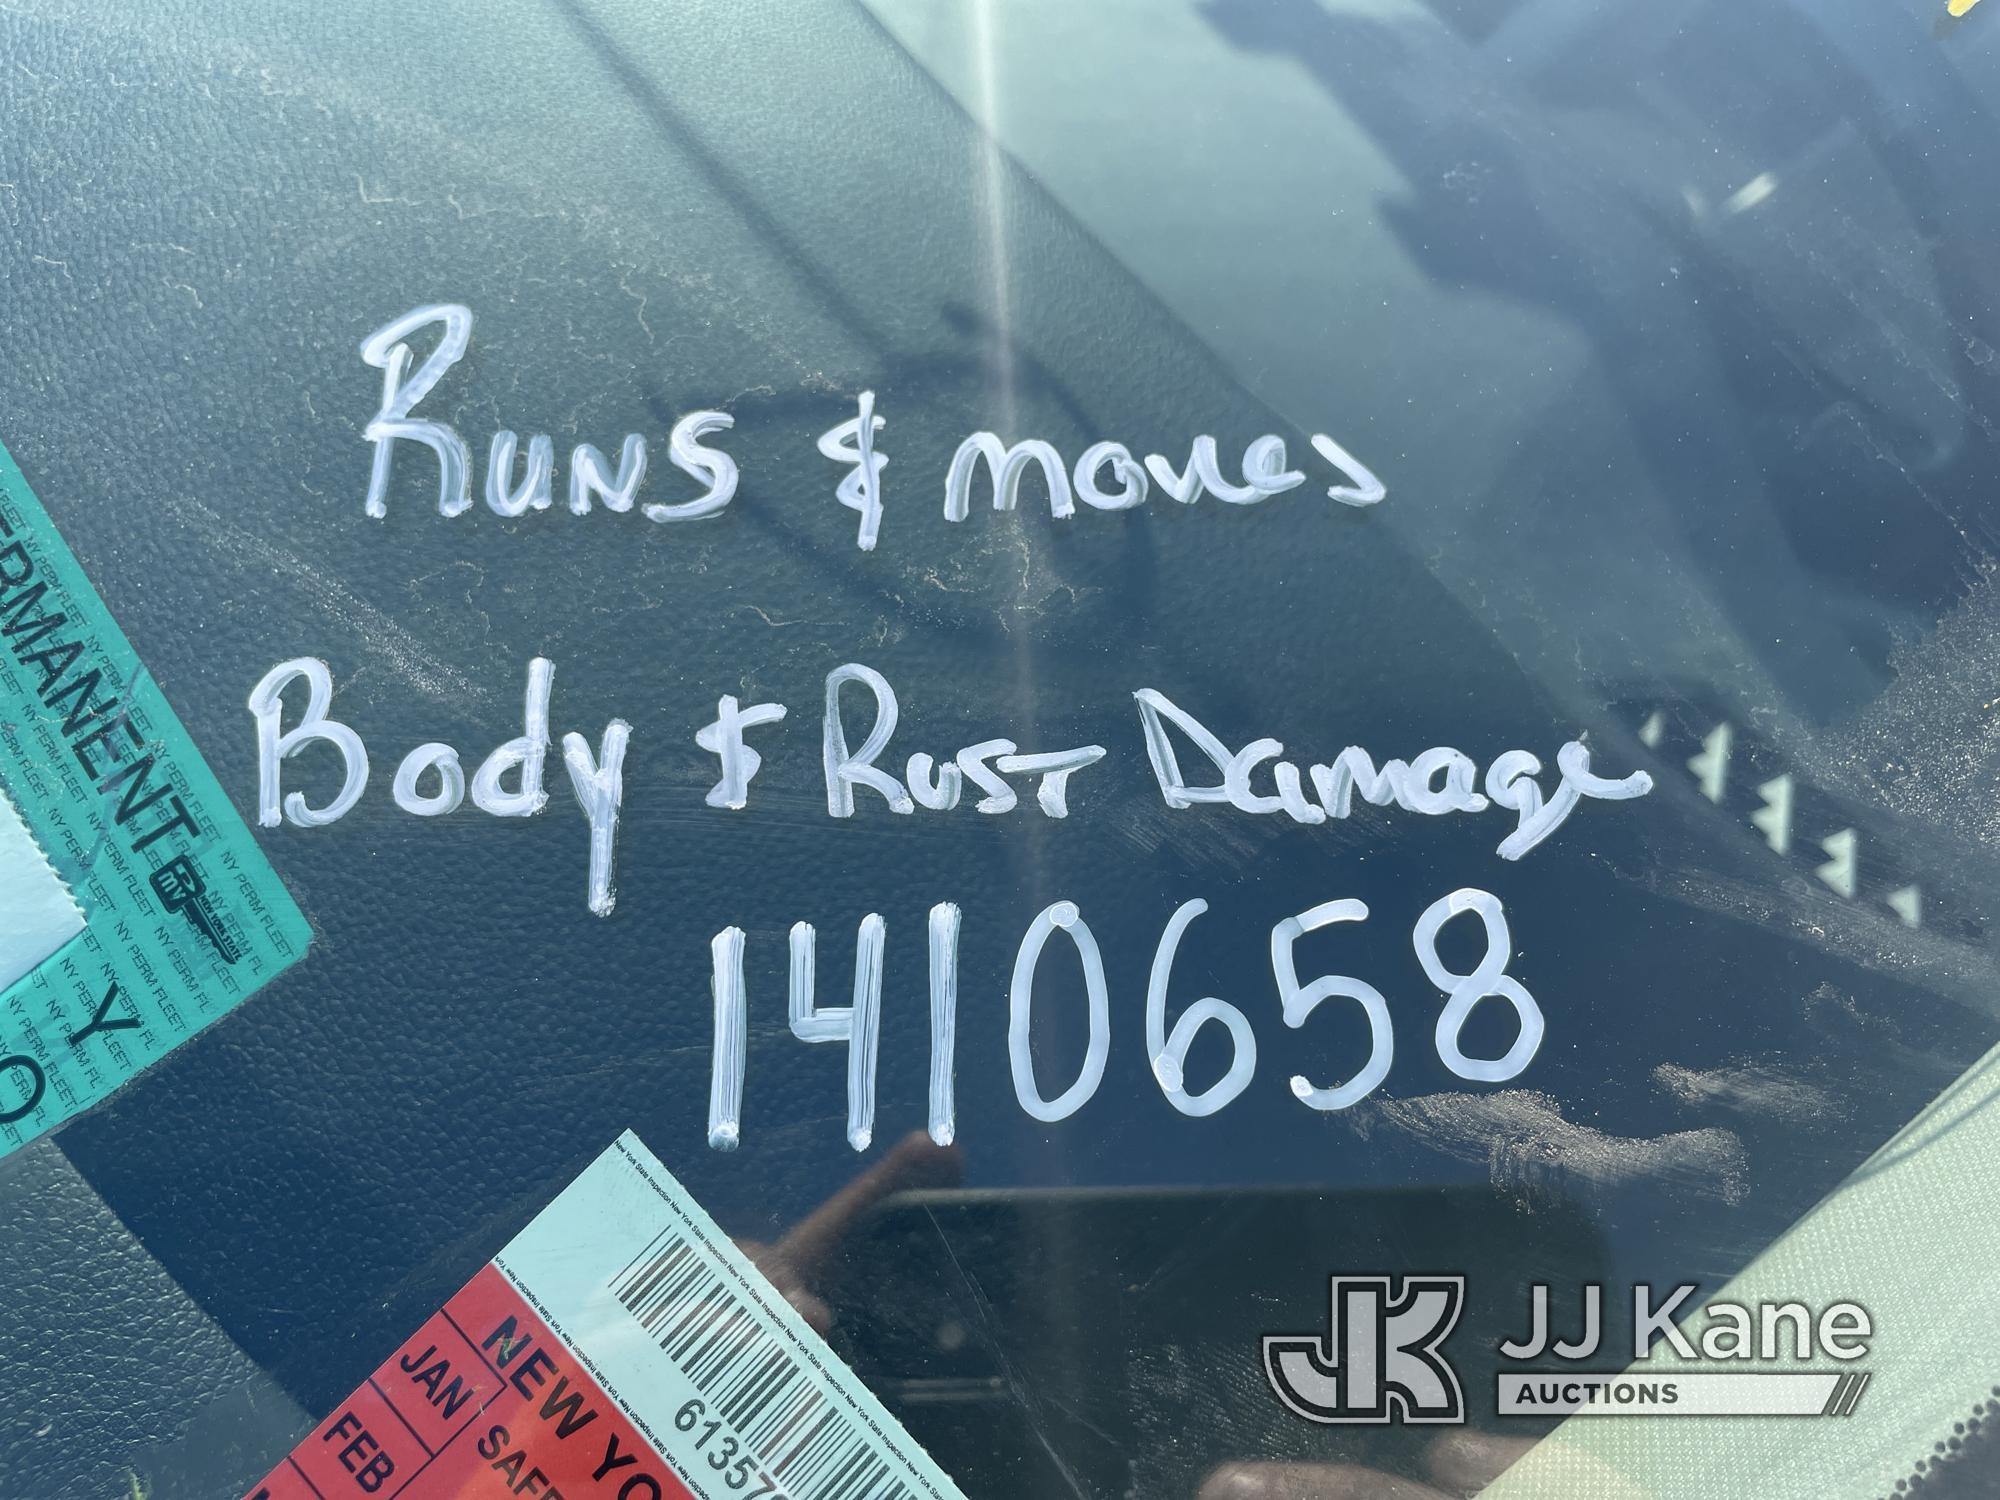 (Plymouth Meeting, PA) 2013 Honda Civic 4-Door Sedan CNG Only) (Runs & moves, Body & Rust Damage